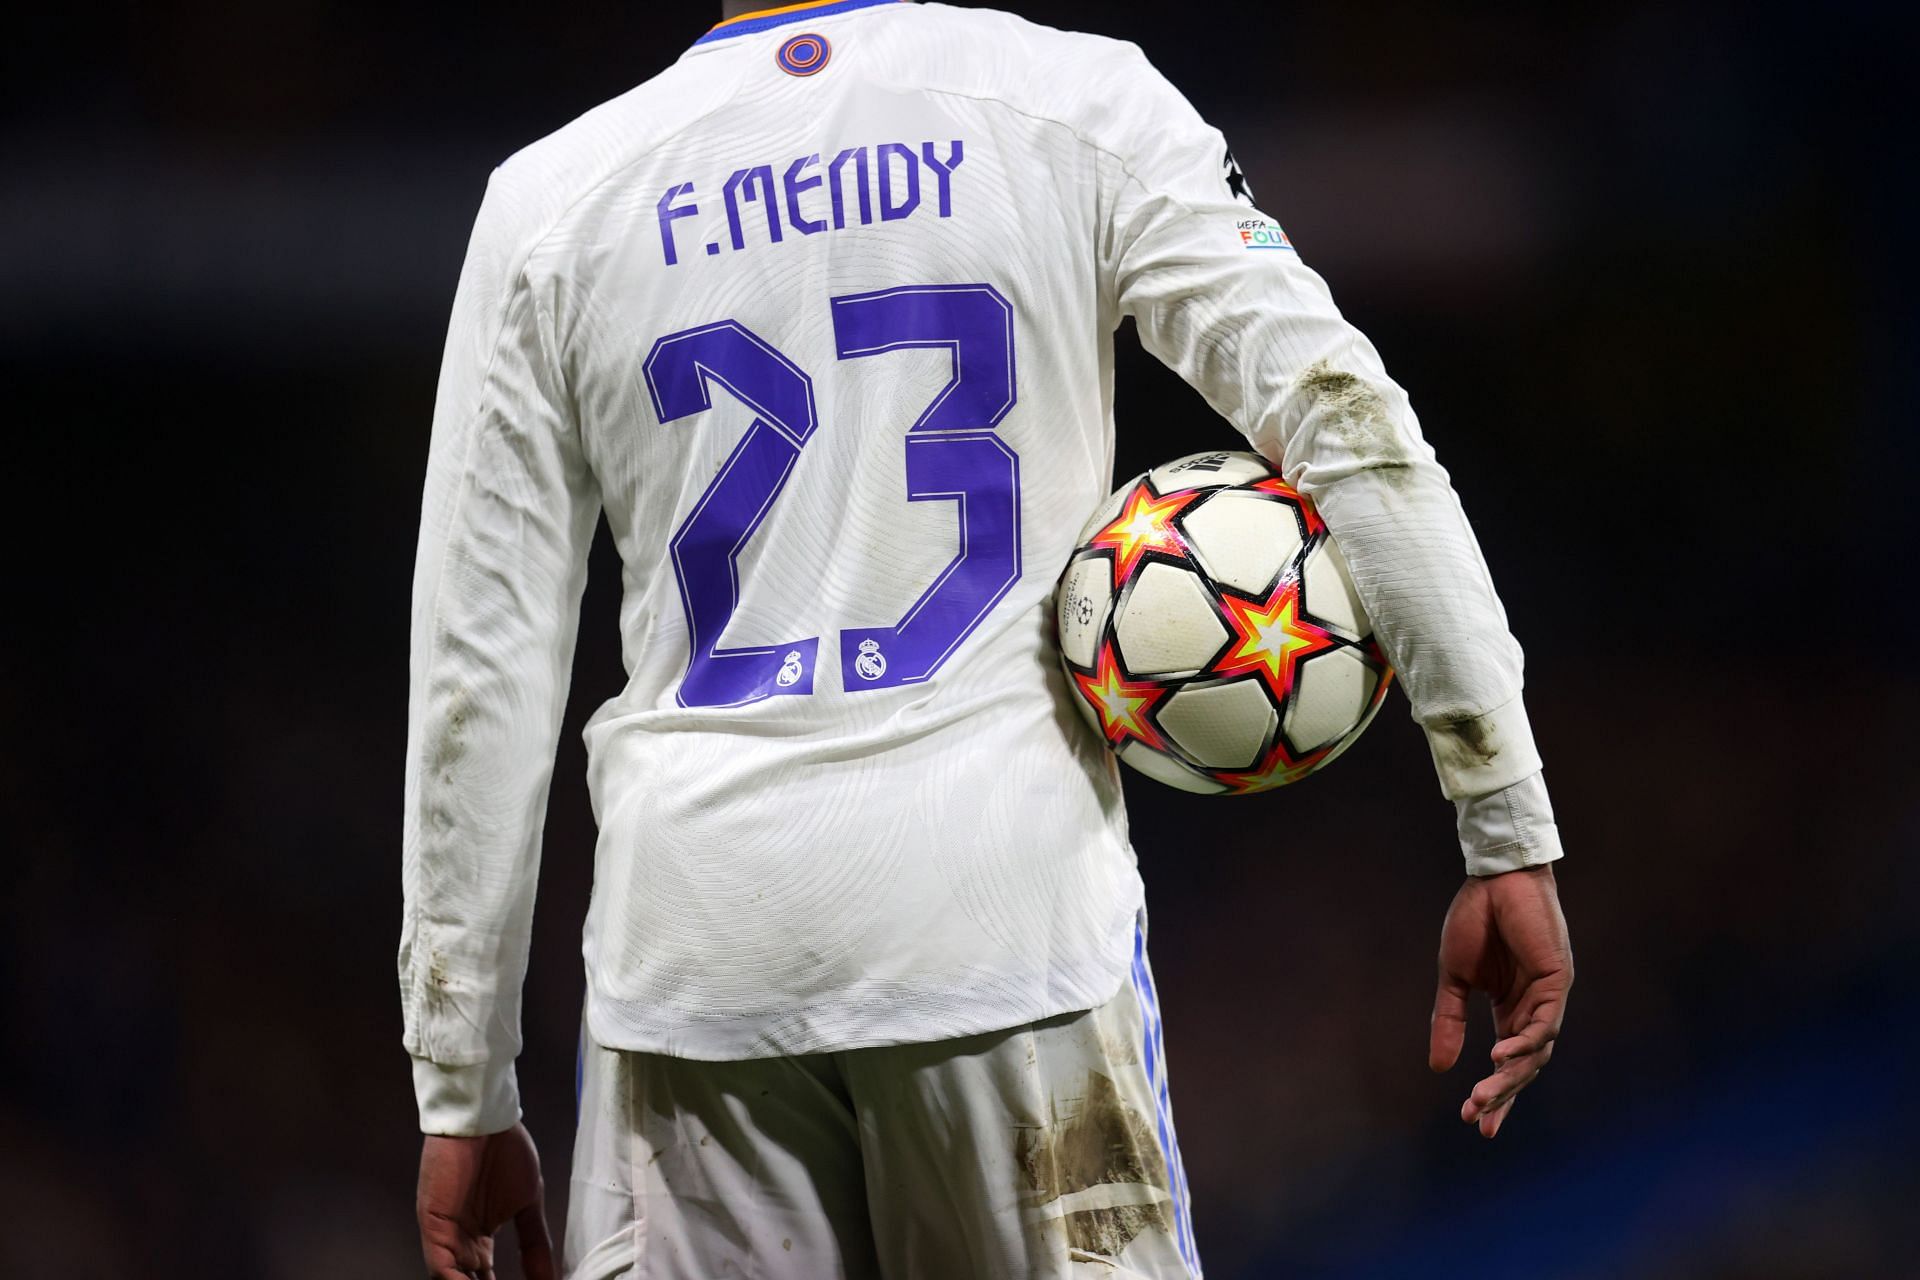 Ferland Mendy of Real Madrid